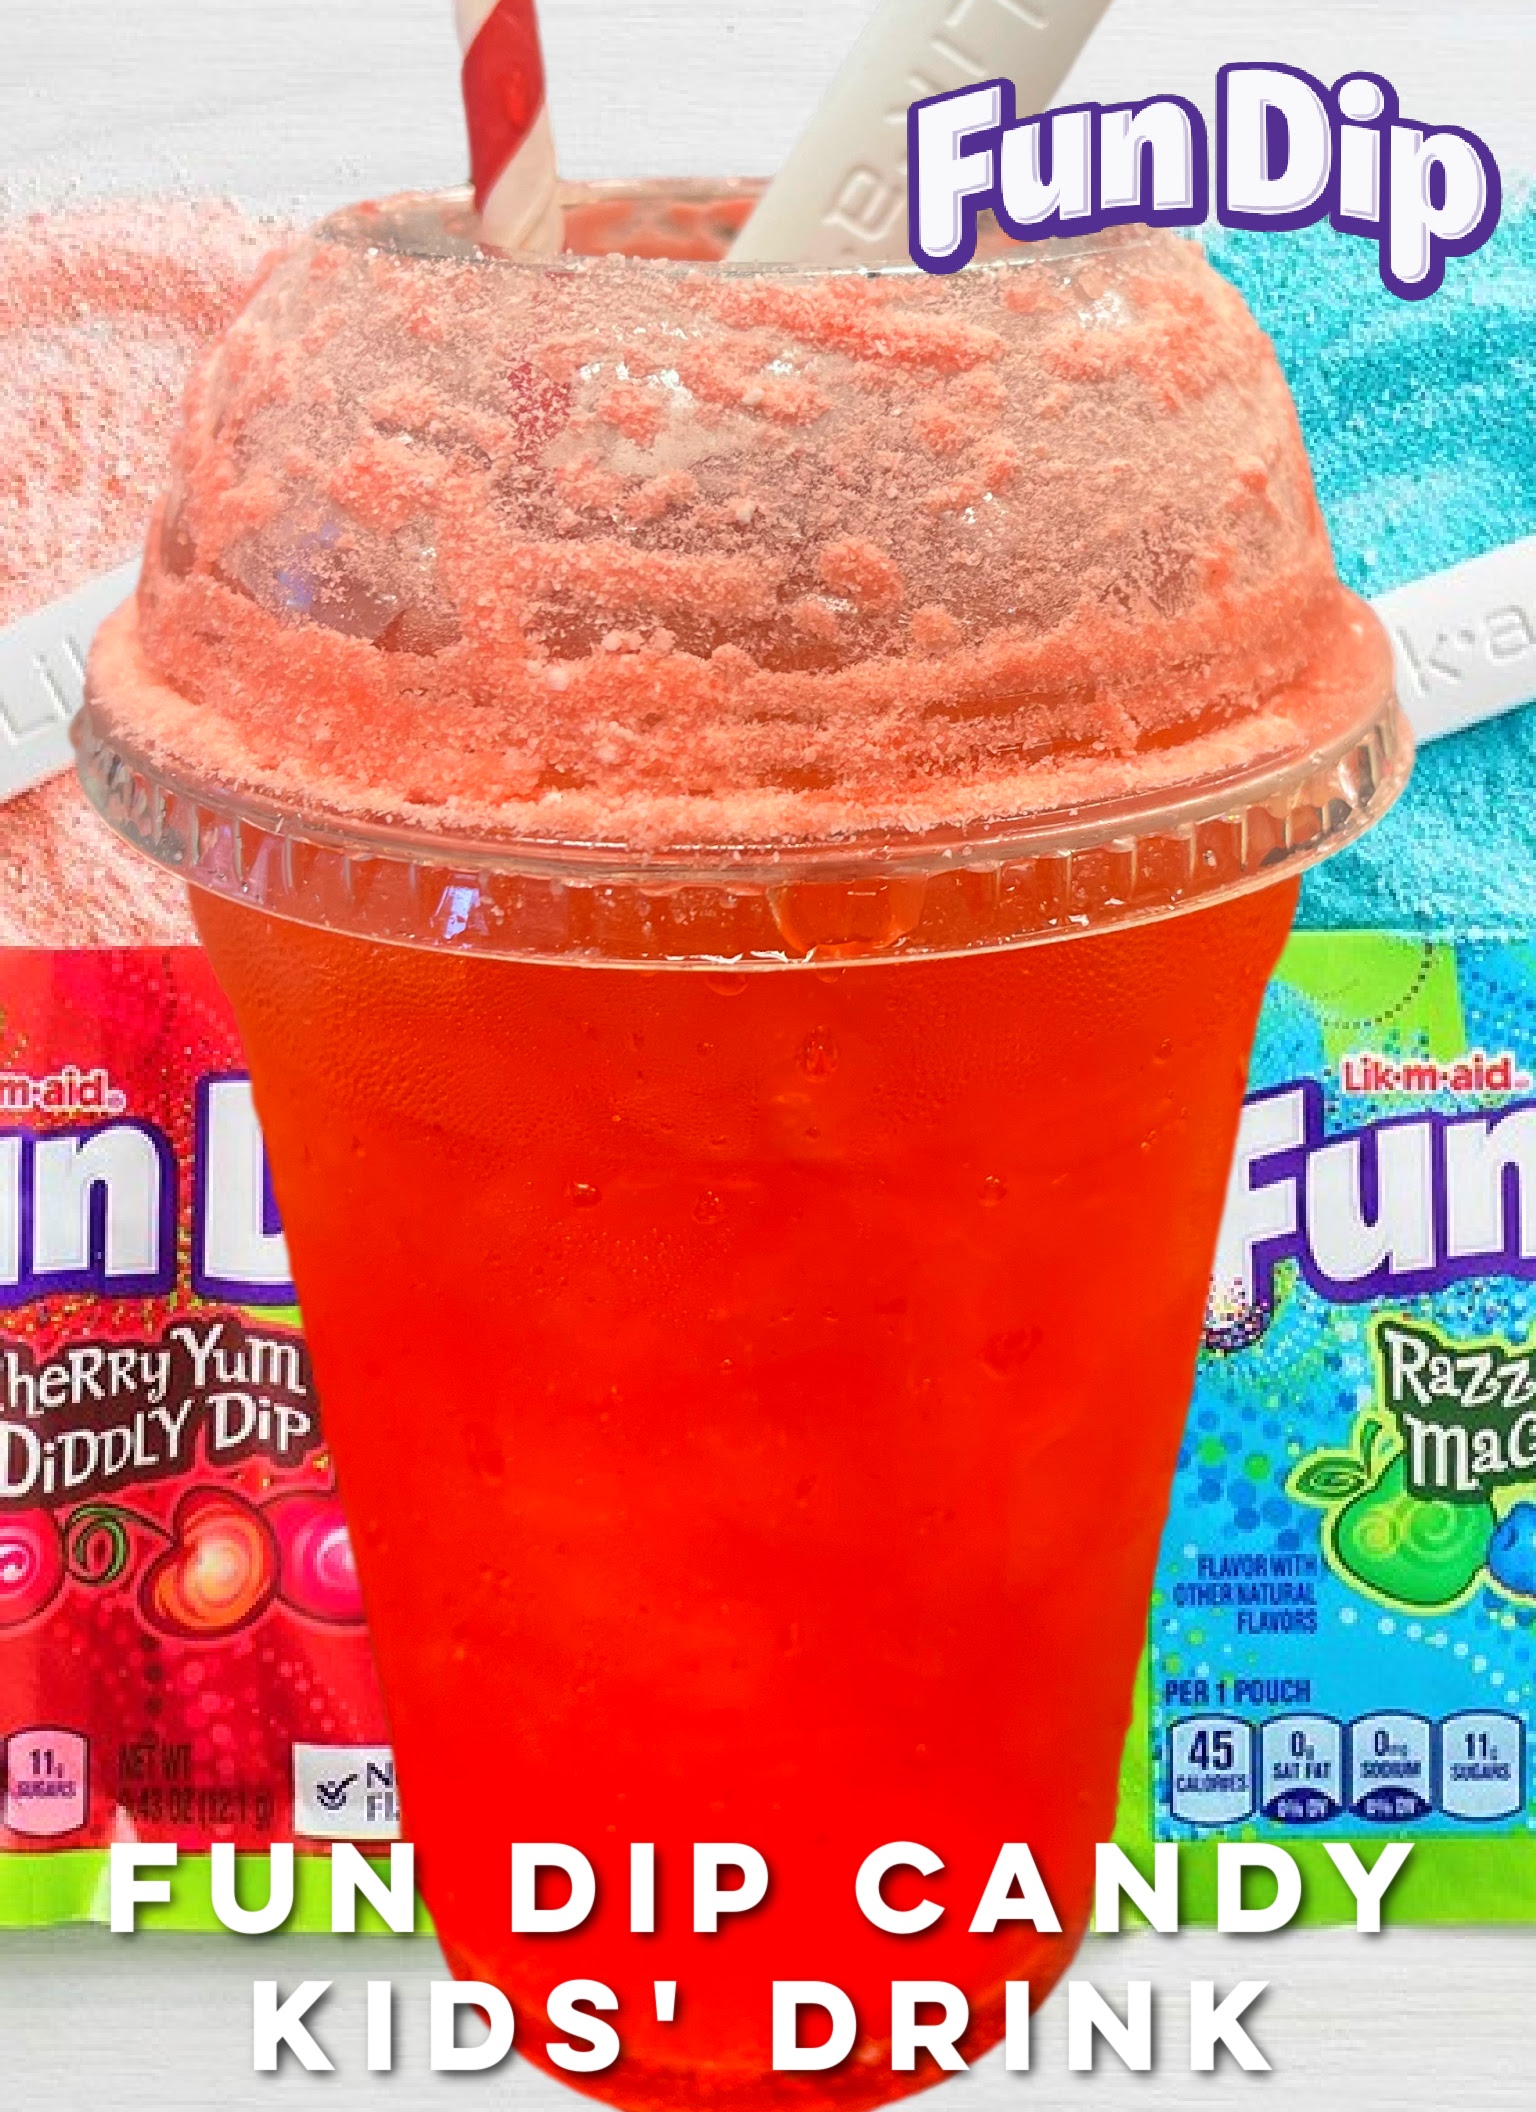 Fun Dip Kids' Candy Drink